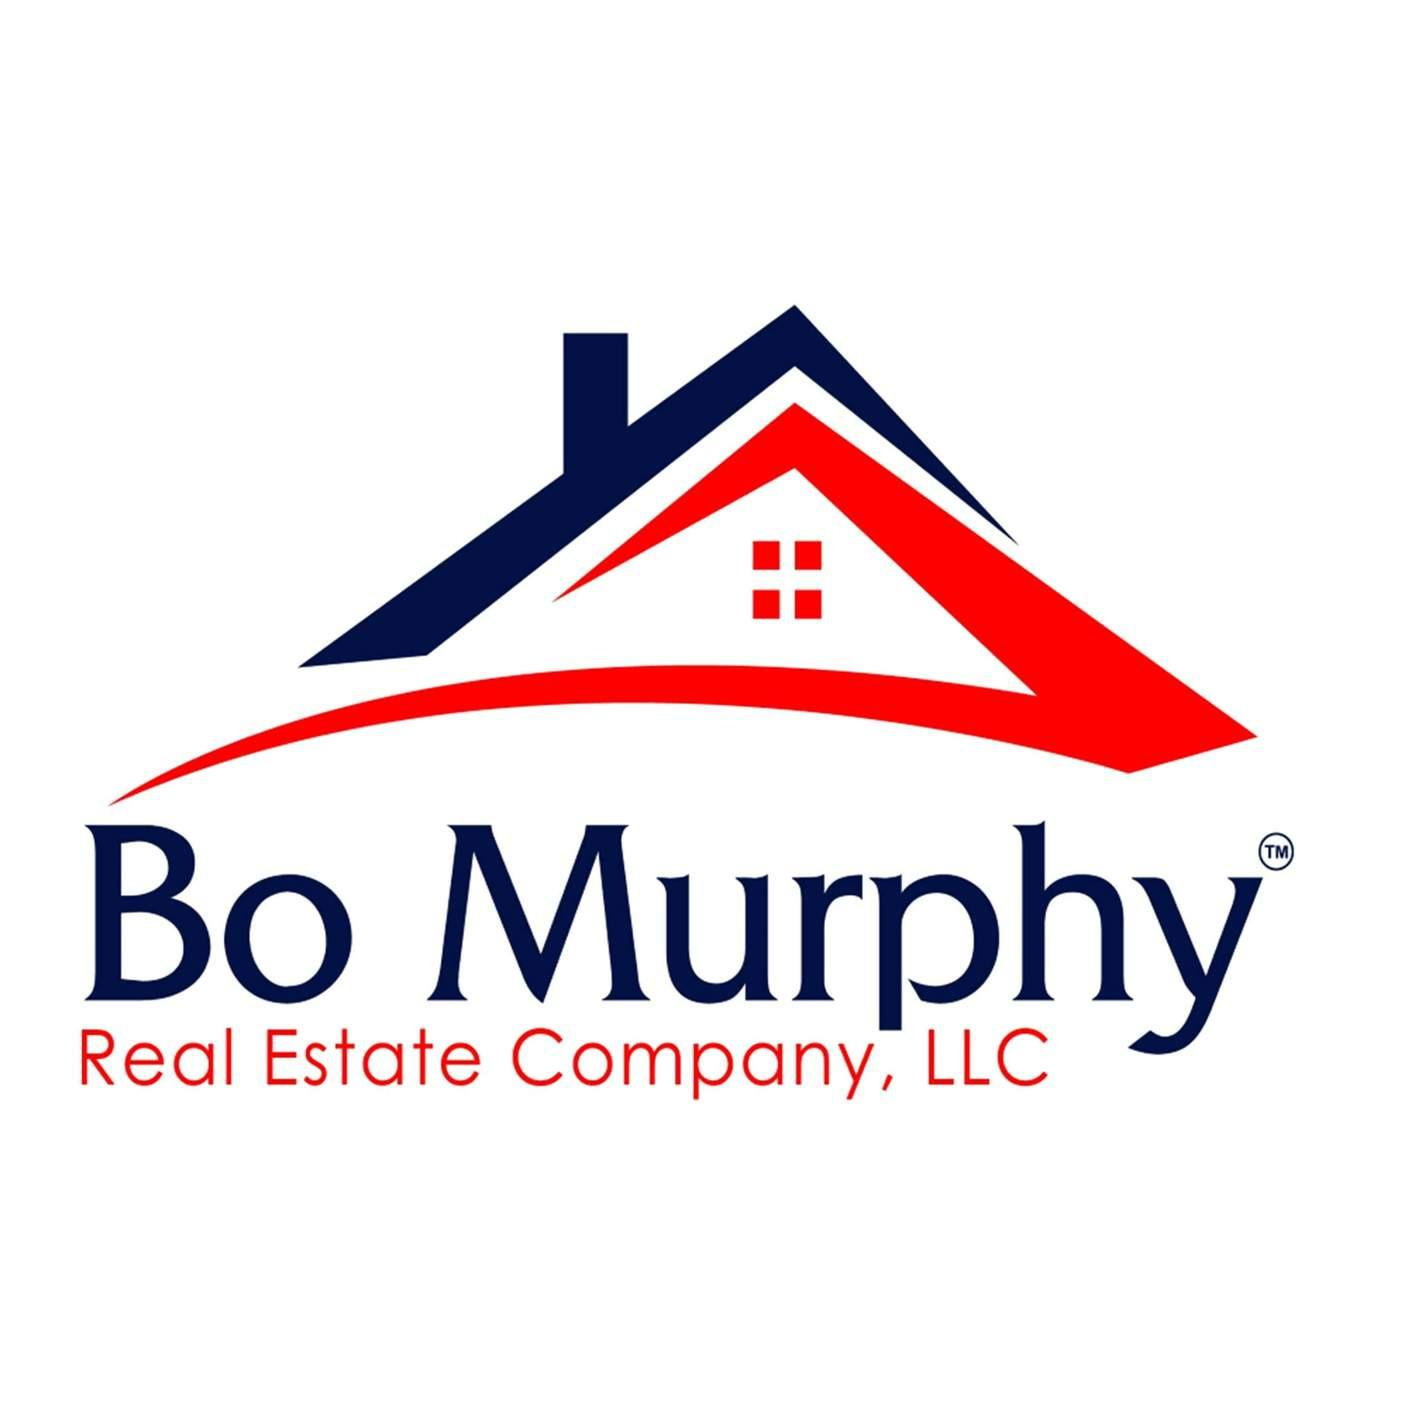 Bo Murphy | Bo Murphy Real Estate Company